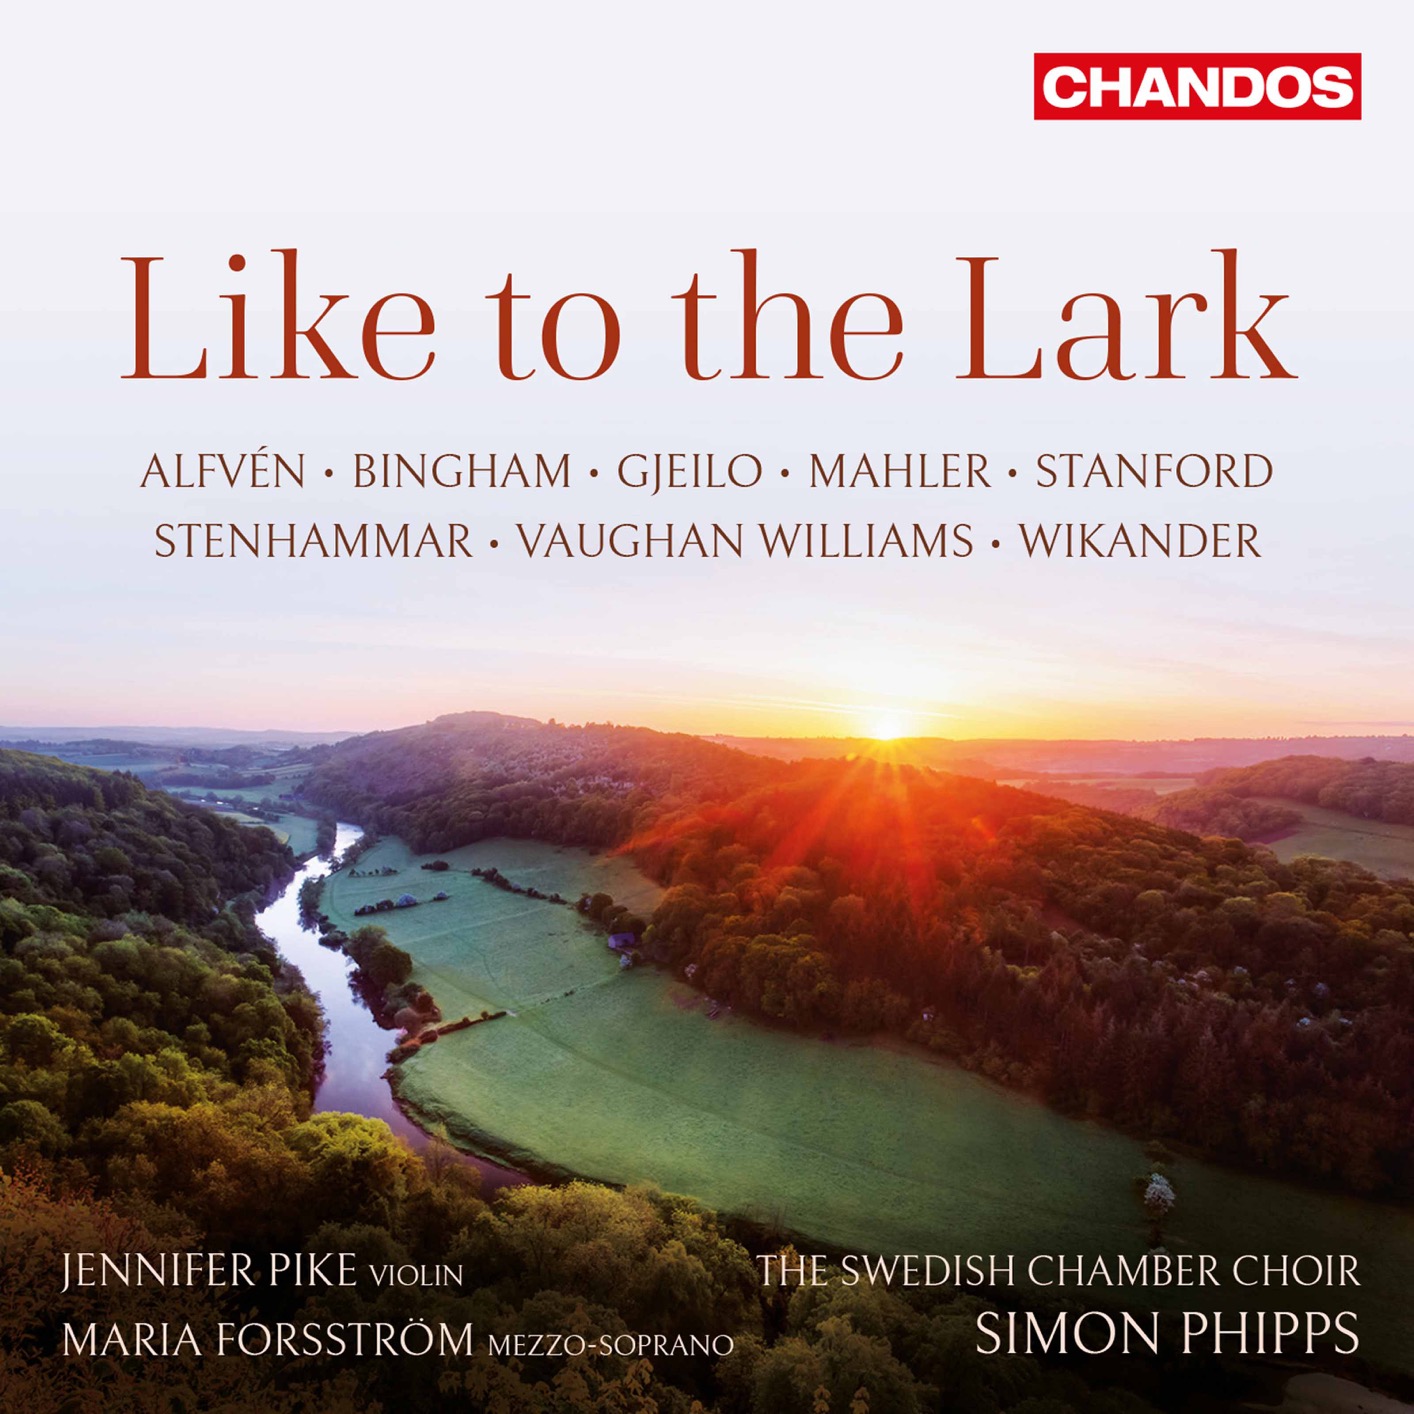 Swedish Chamber Choir & Simon Phipps – Like to the Lark (2019) [FLAC 24bit/96kHz]